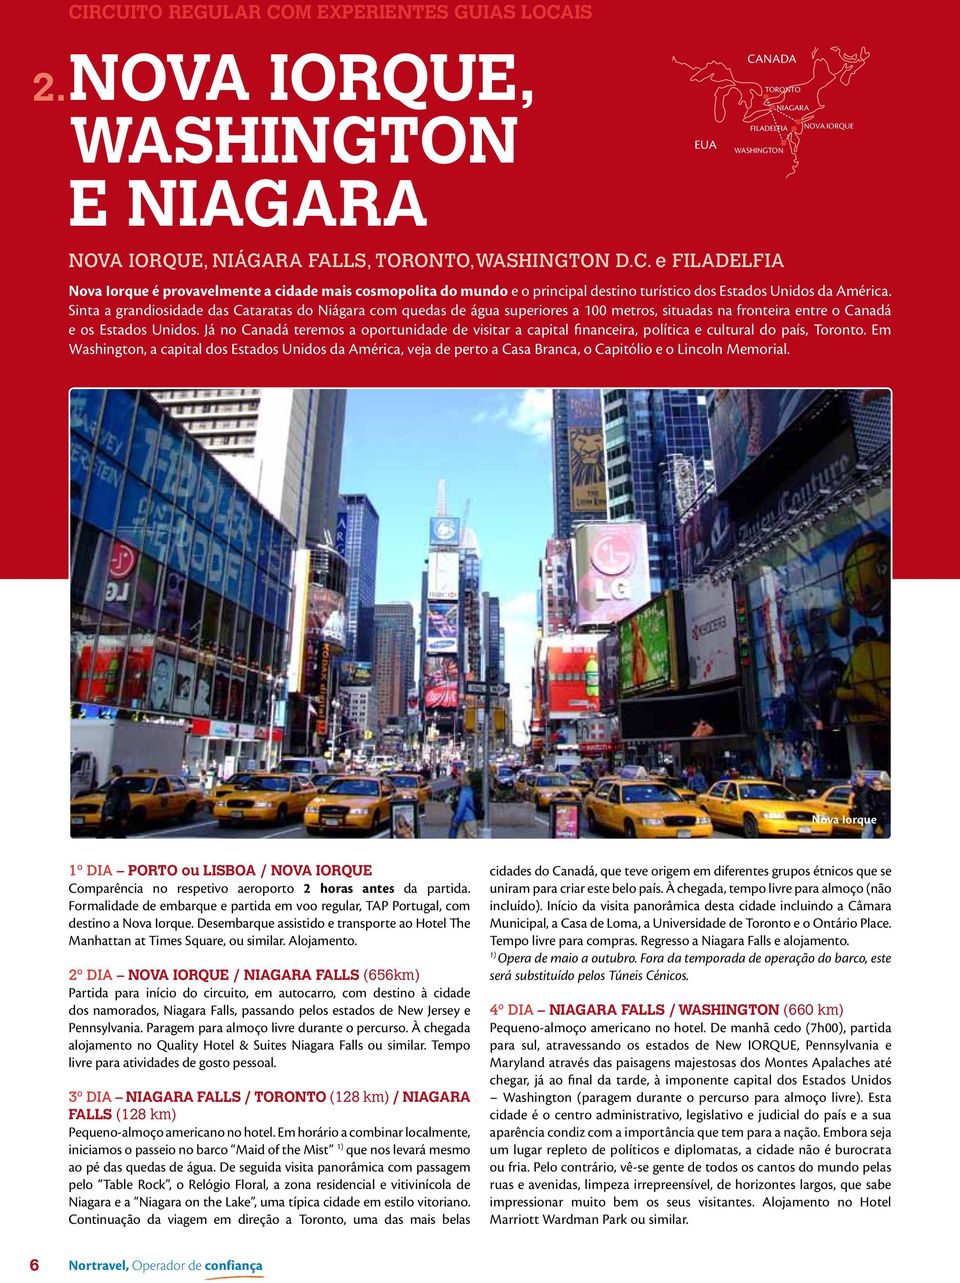 Já no Canadá teremos a oportunidade de visitar a capital financeira, política e cultural do país, Toronto.